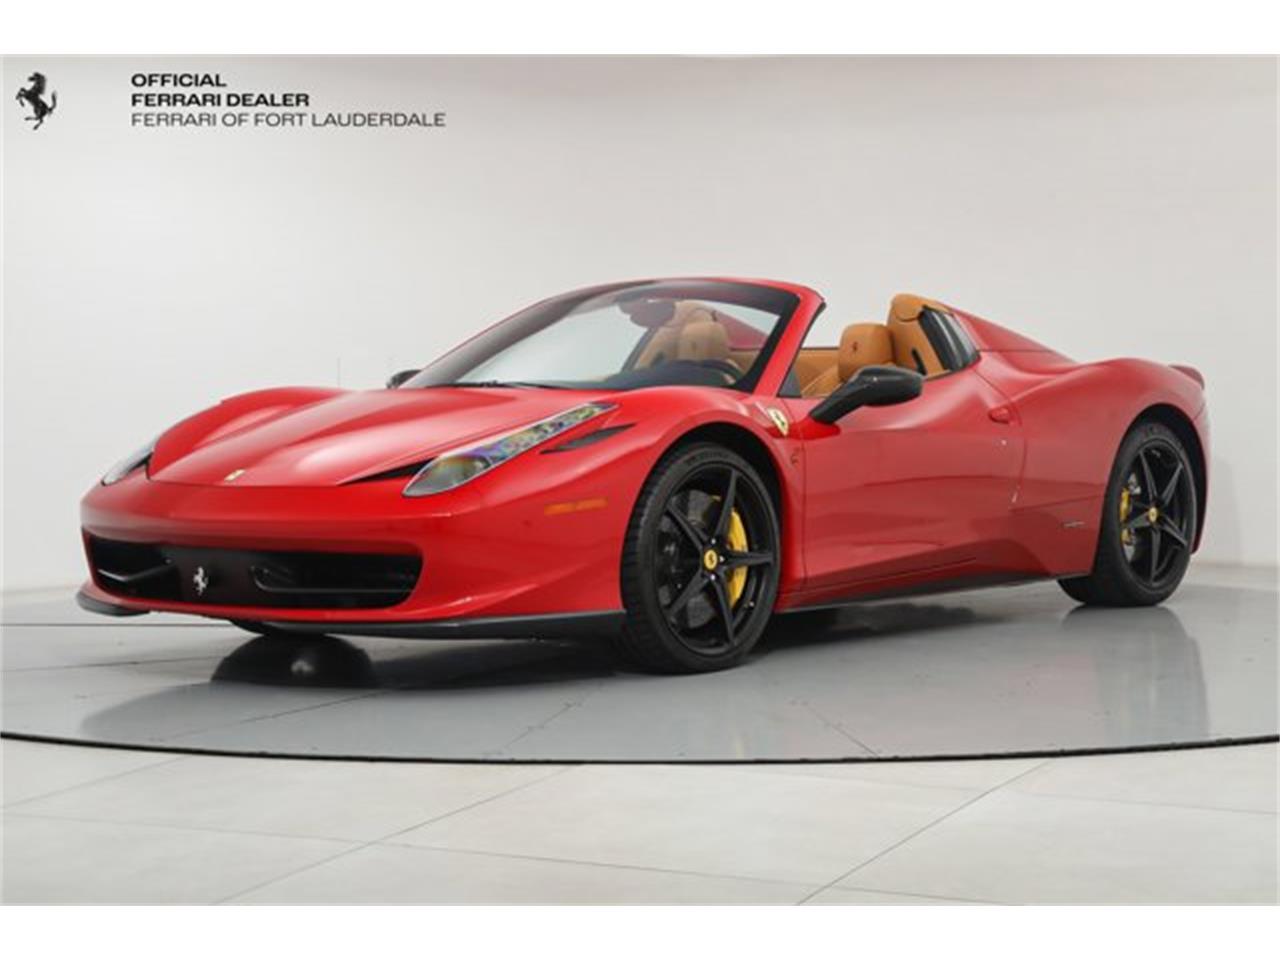 For Sale: 2015 Ferrari 458 in Fort Lauderdale, Florida for sale in Fort Lauderdale, FL